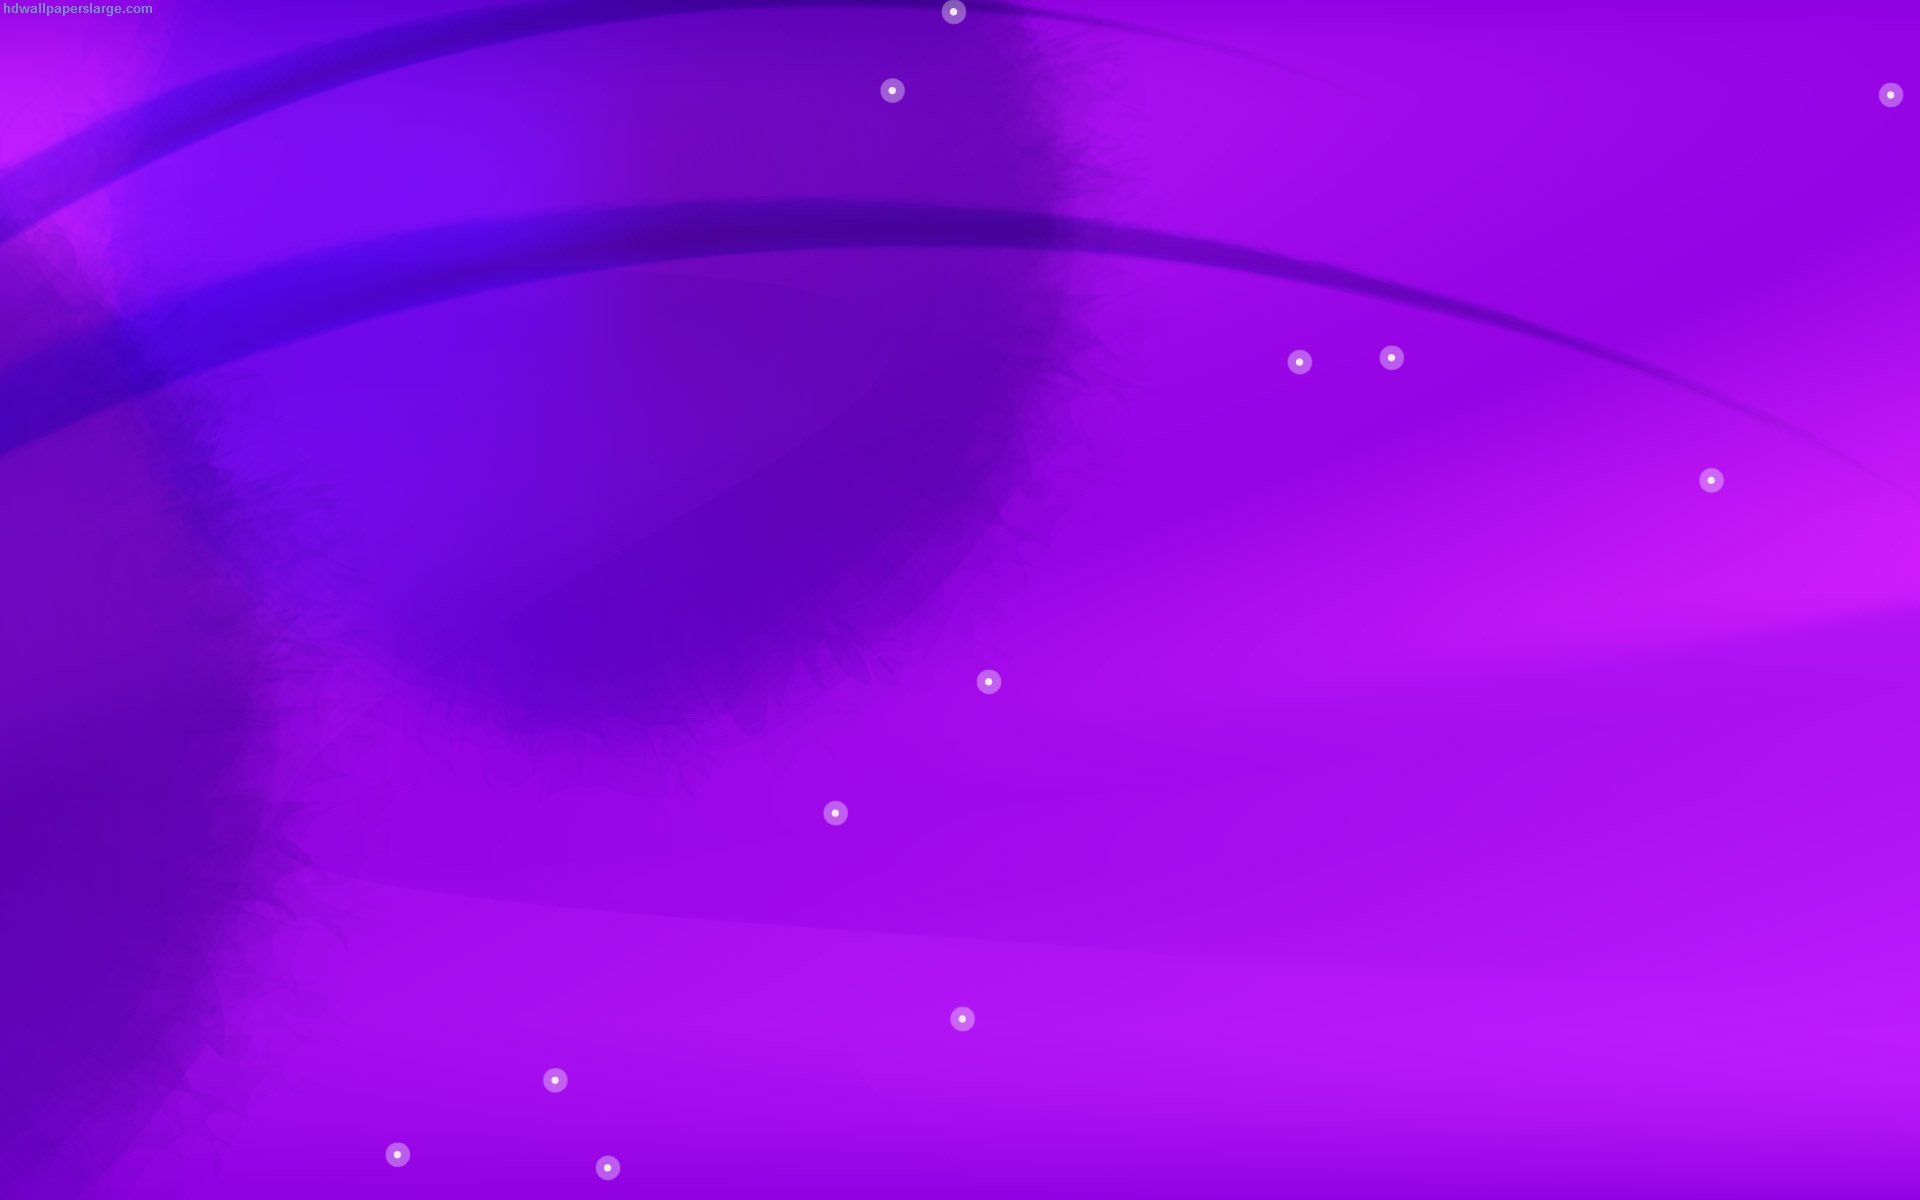 Plain Purple HD Wallpaper For Your Desktop Background Or